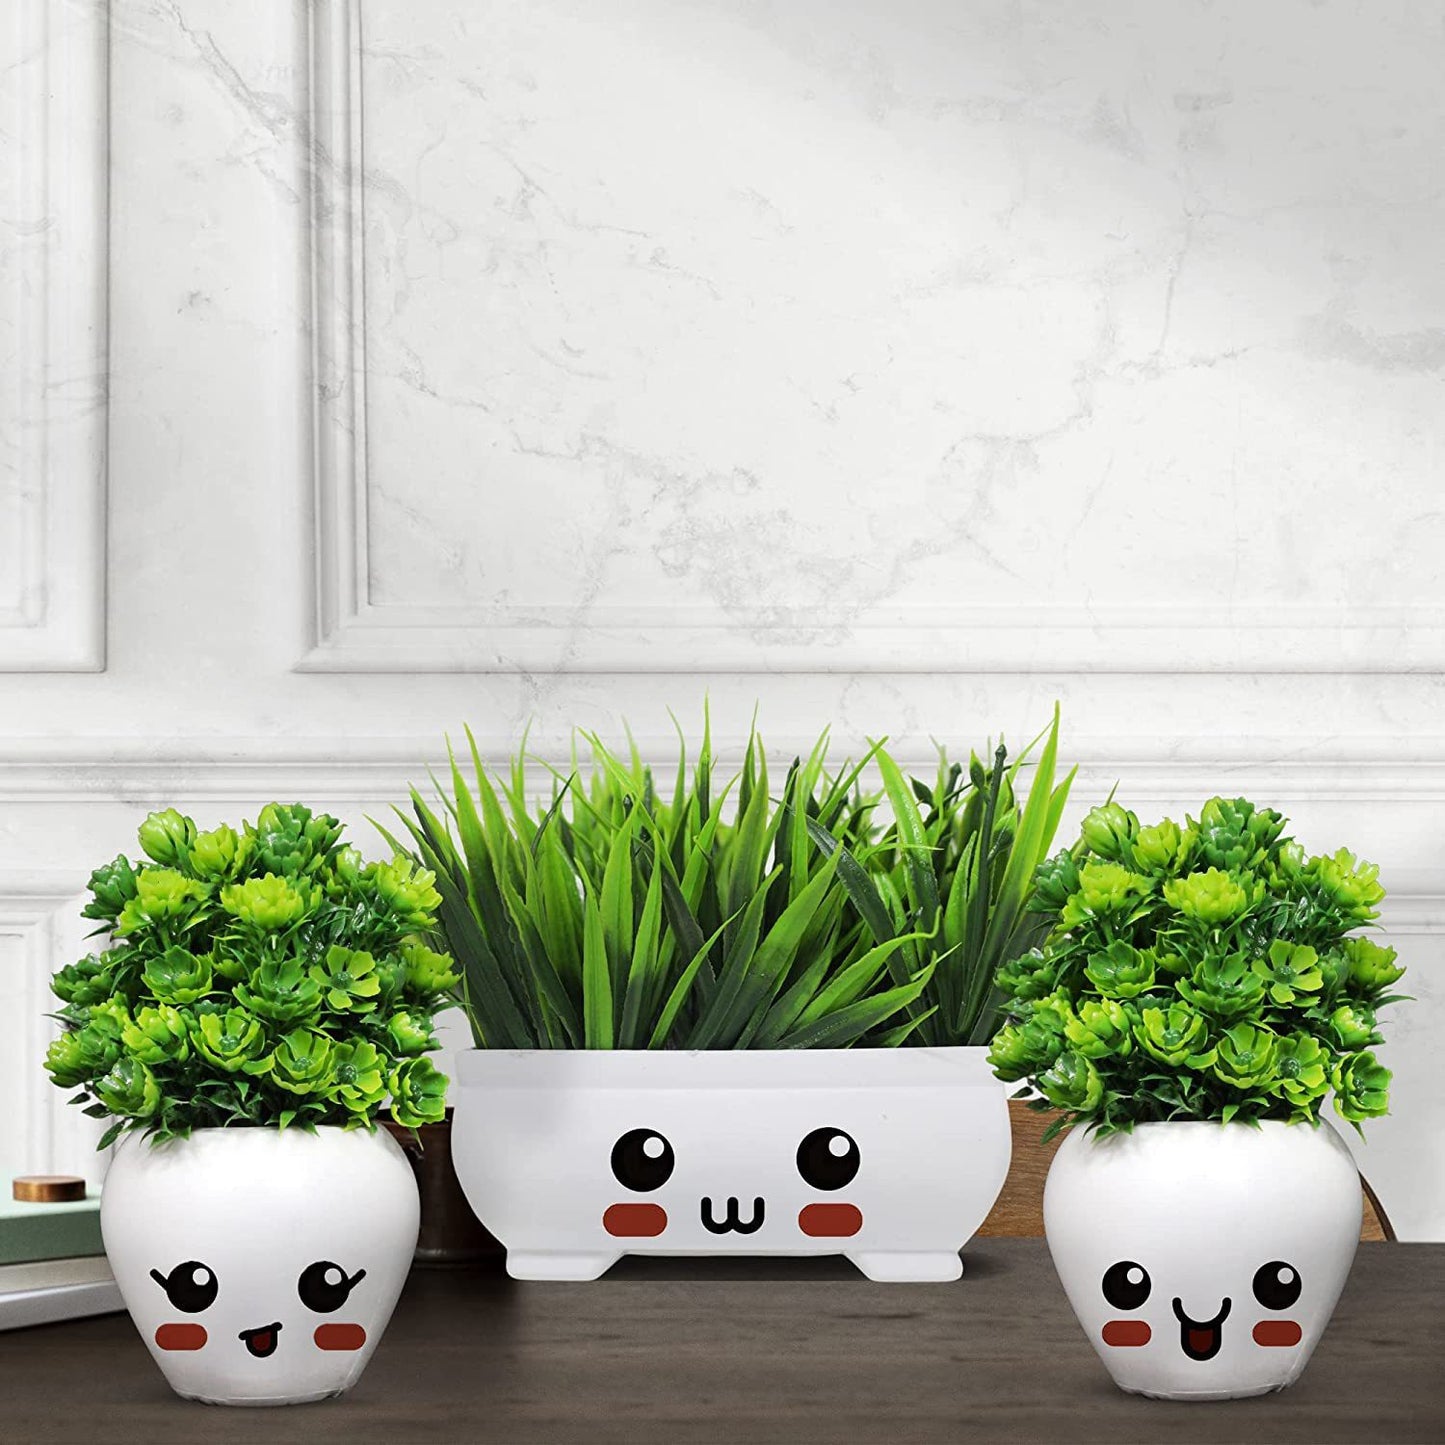 Rakakart- Artificial Plants with Cute Face,set of 3 emoji pots